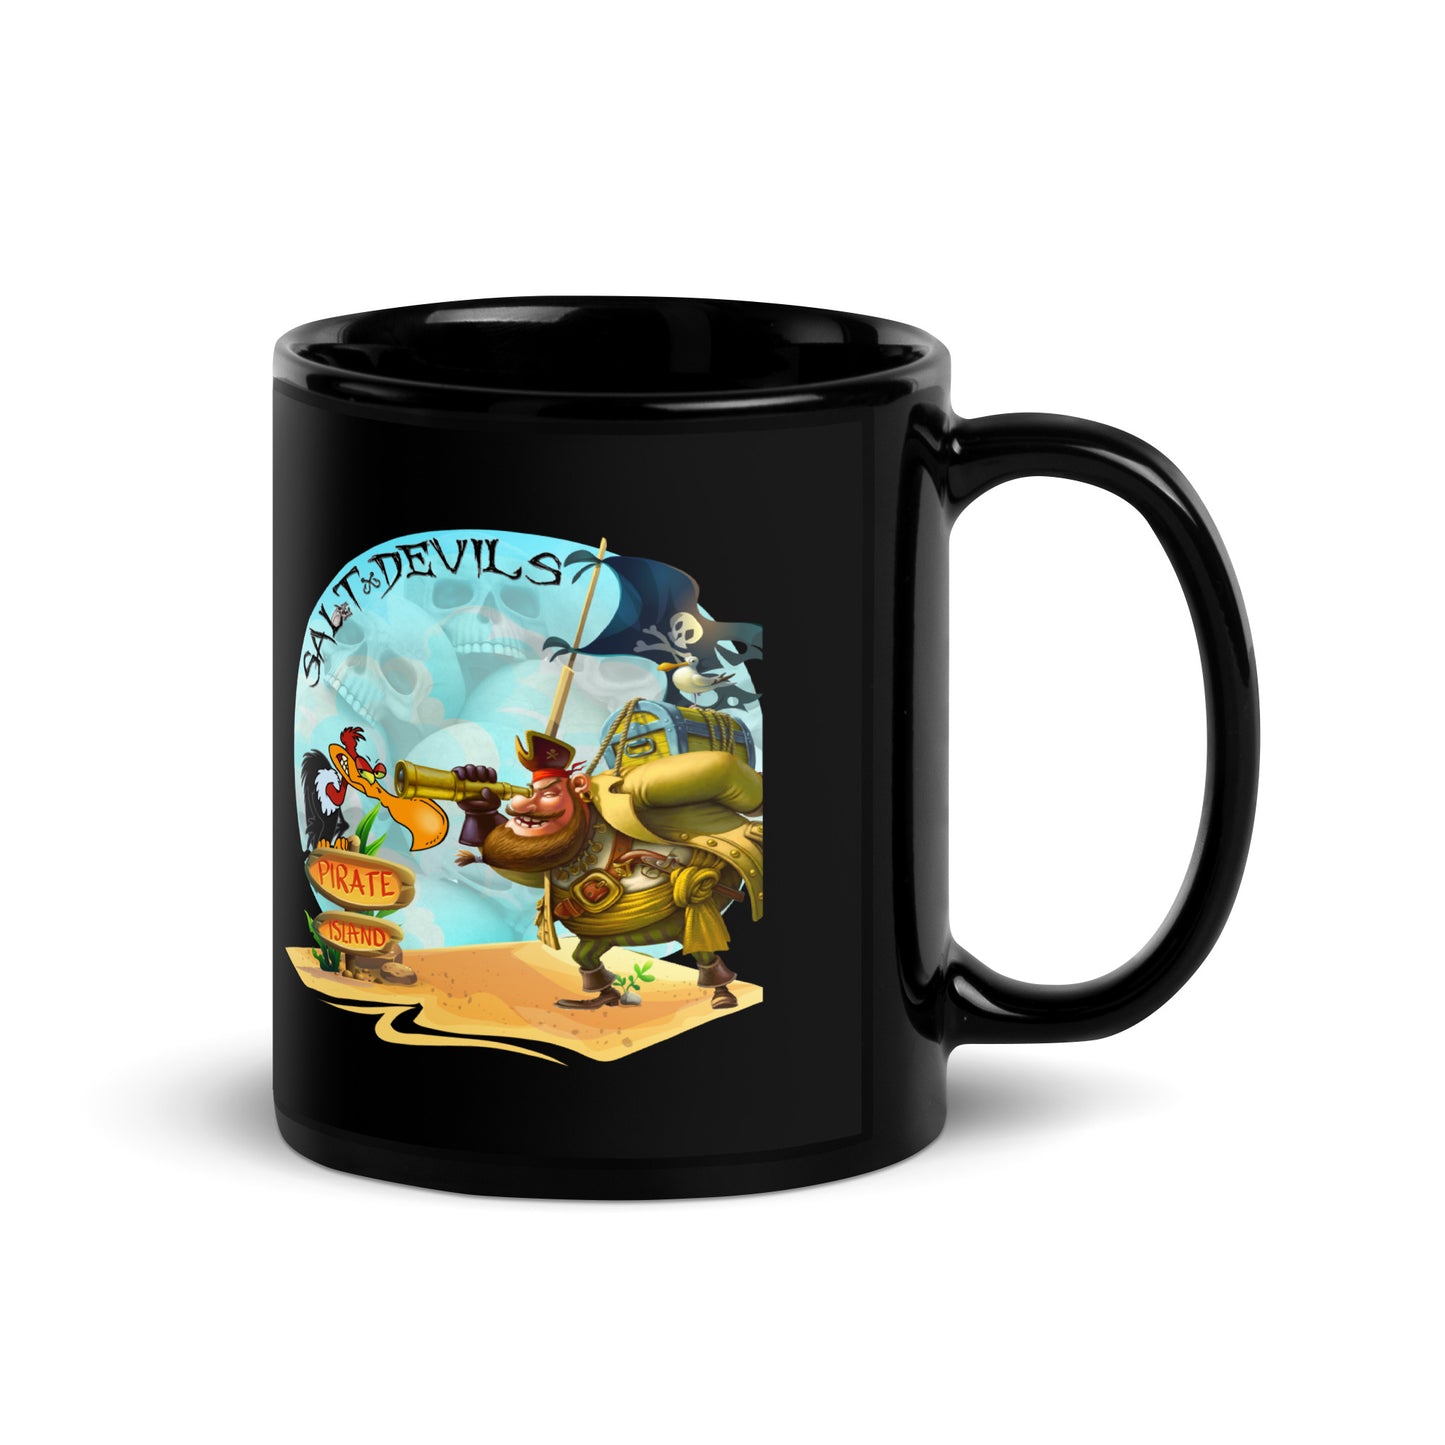 Pirate Island Coffee Mug